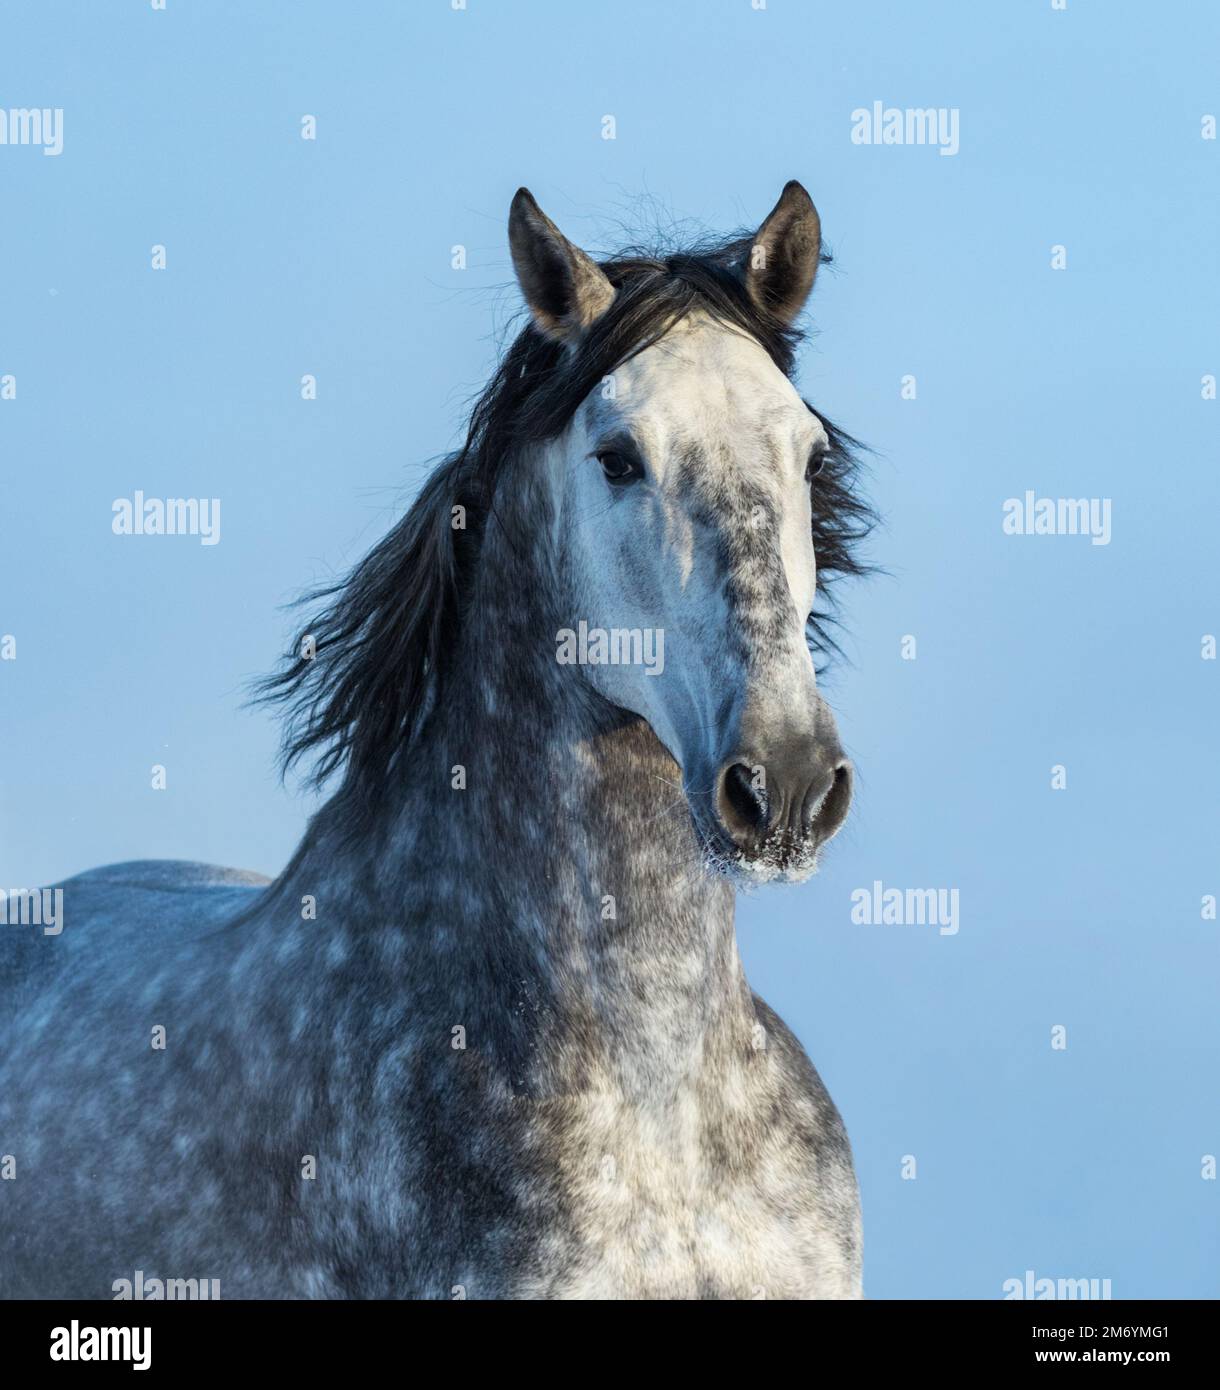 Dapple-grey Spanish Horse - Portrait in Motion Stock Image - Image